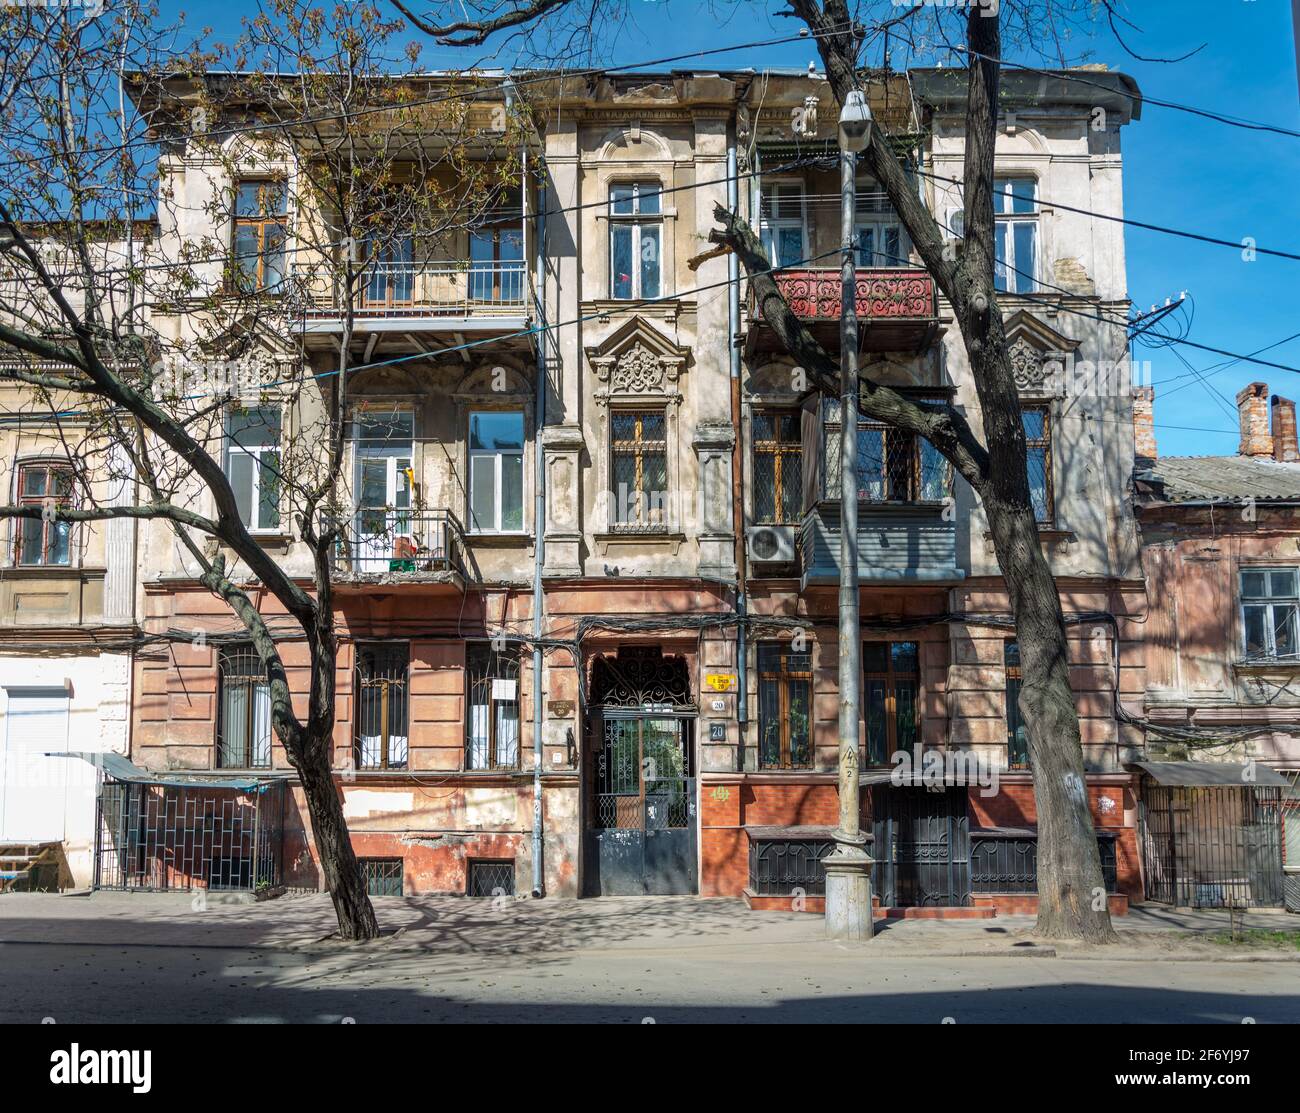 Odessa, Ukraine - APR 28, 2019: Maison typique de tenement pittoresque à Odessa, Ukraine Banque D'Images